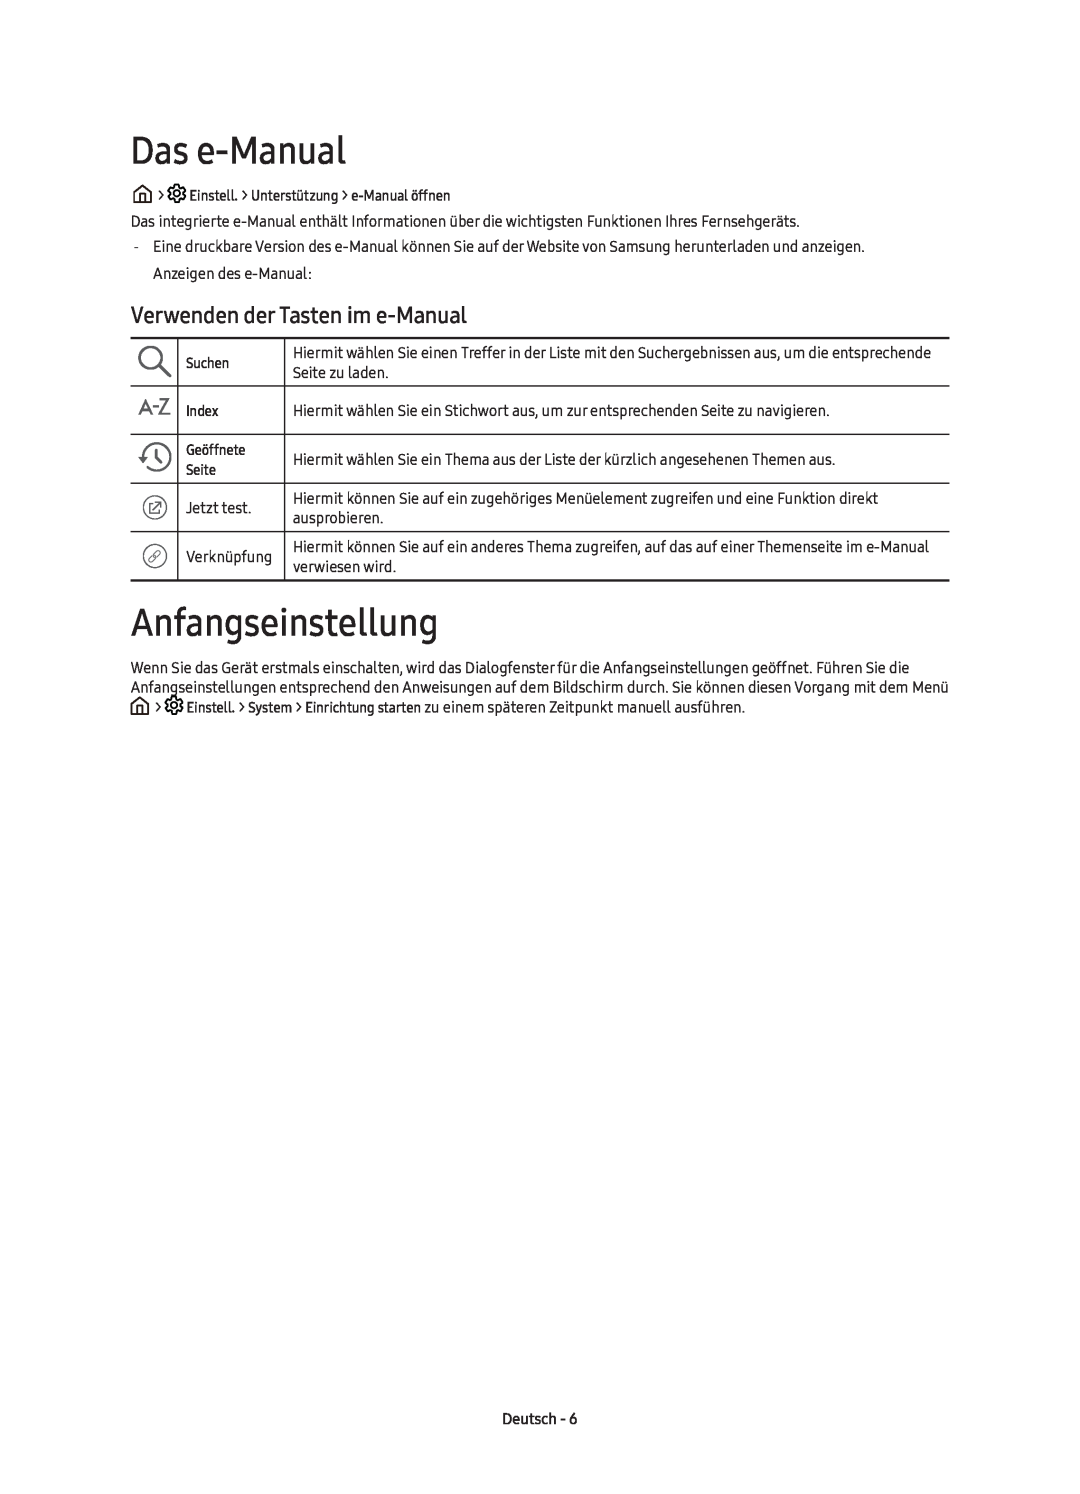 Samsung UE40K6379SUXZG, UE55K6379SUXZG manual Das e-Manual, Anfangseinstellung, Verwenden der Tasten im e-Manual, Deutsch 